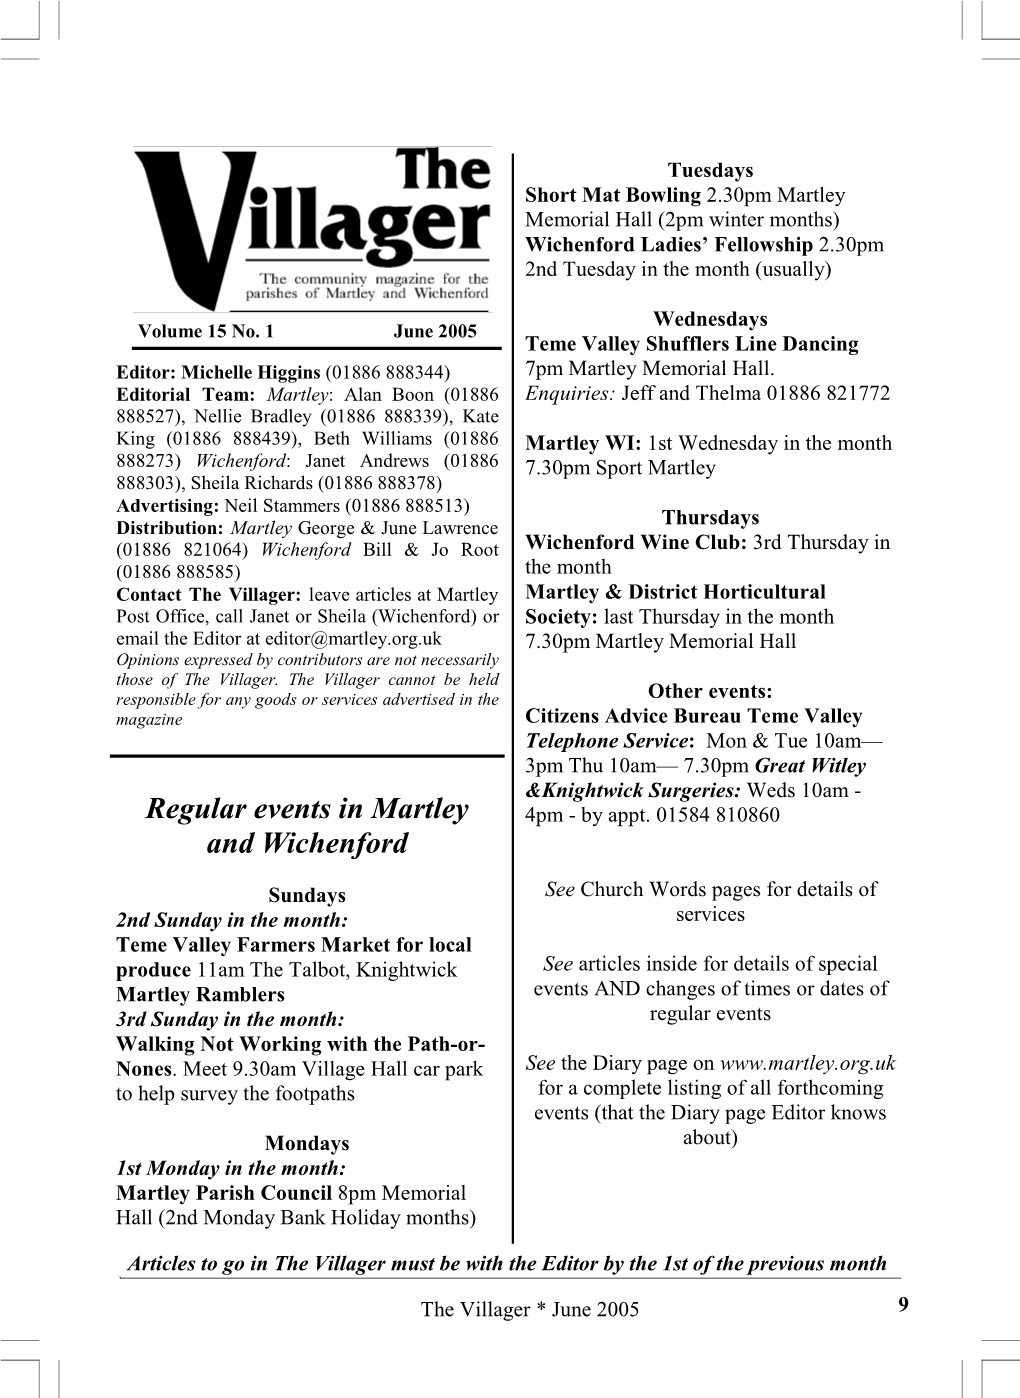 June 2005 Teme Valley Shufflers Line Dancing Editor: Michelle Higgins (01886 888344) 7Pm Martley Memorial Hall